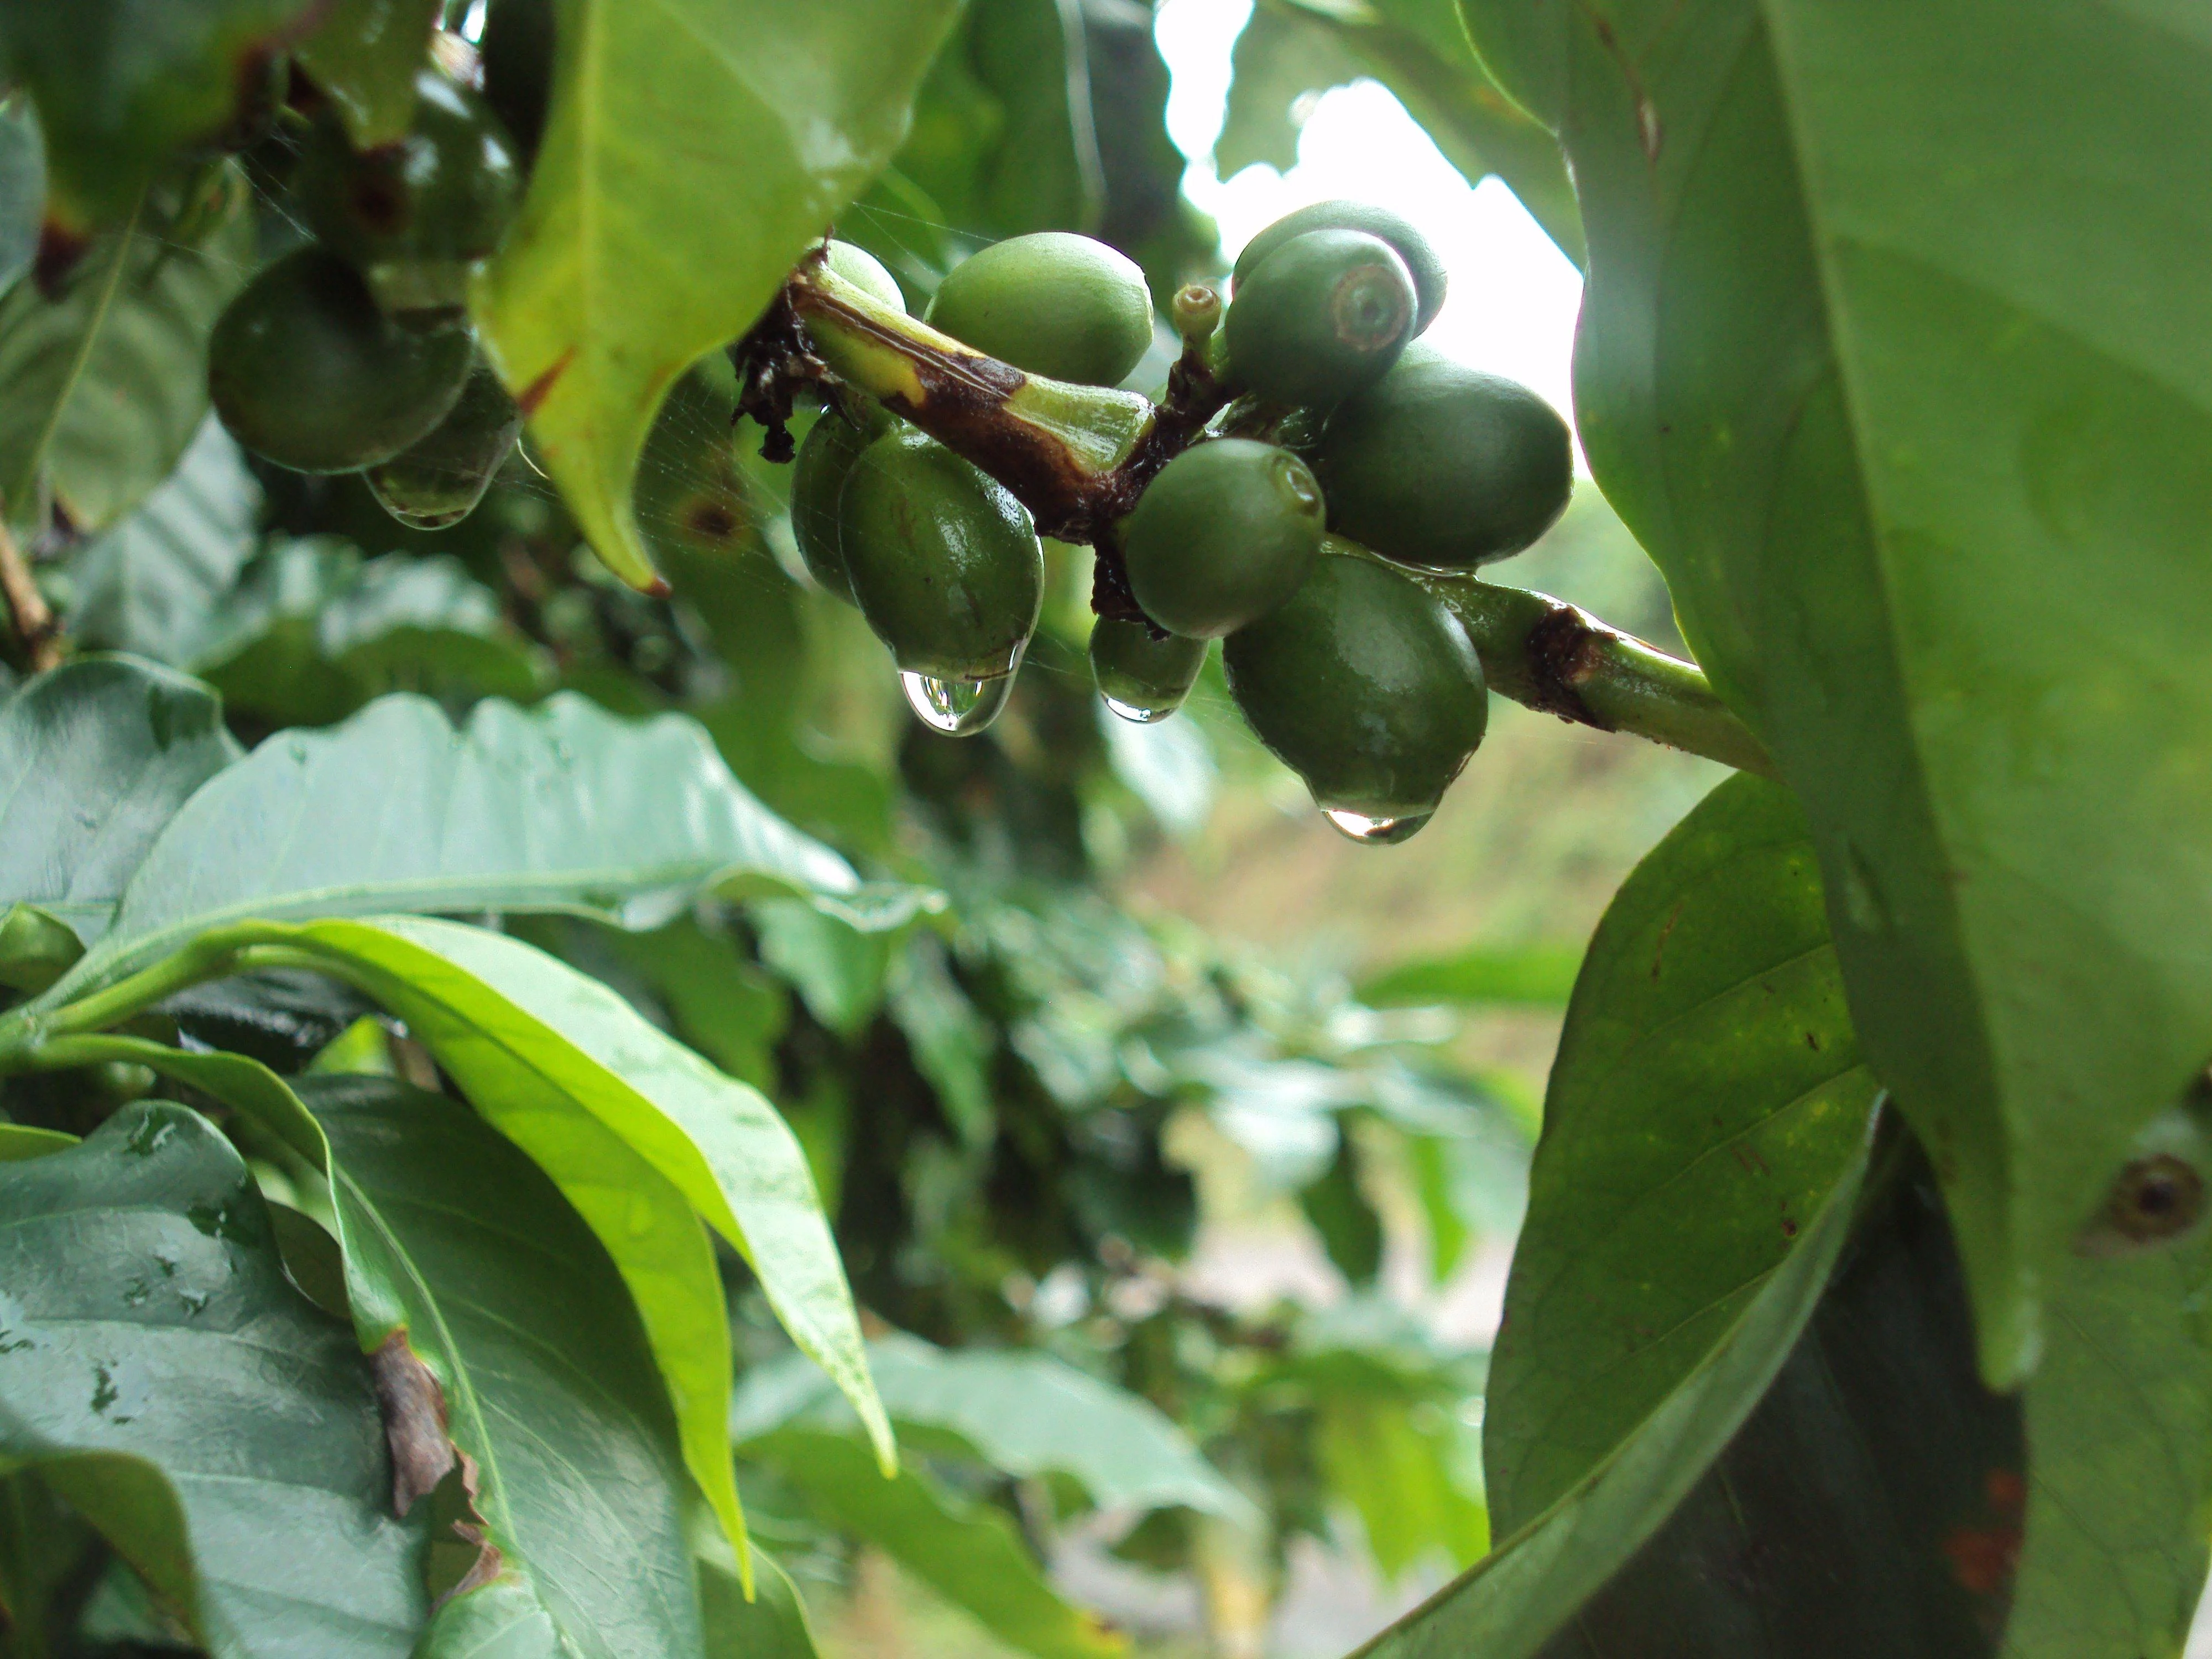 Classic Costa Rican green coffee berries.